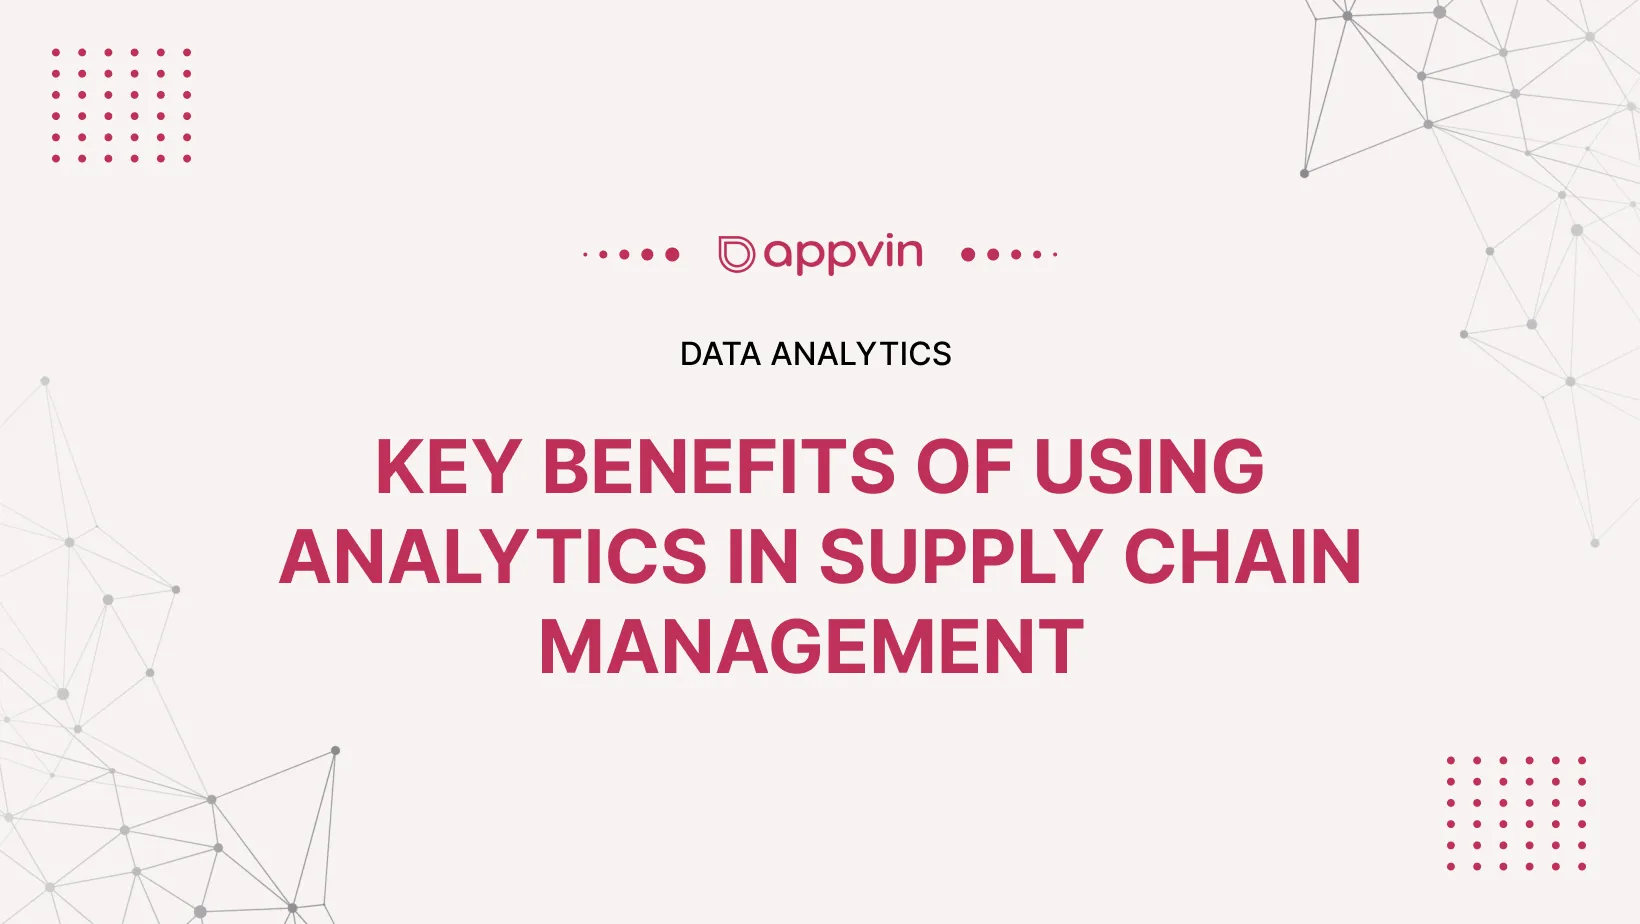 Key benefits of using analytics in supply chain management